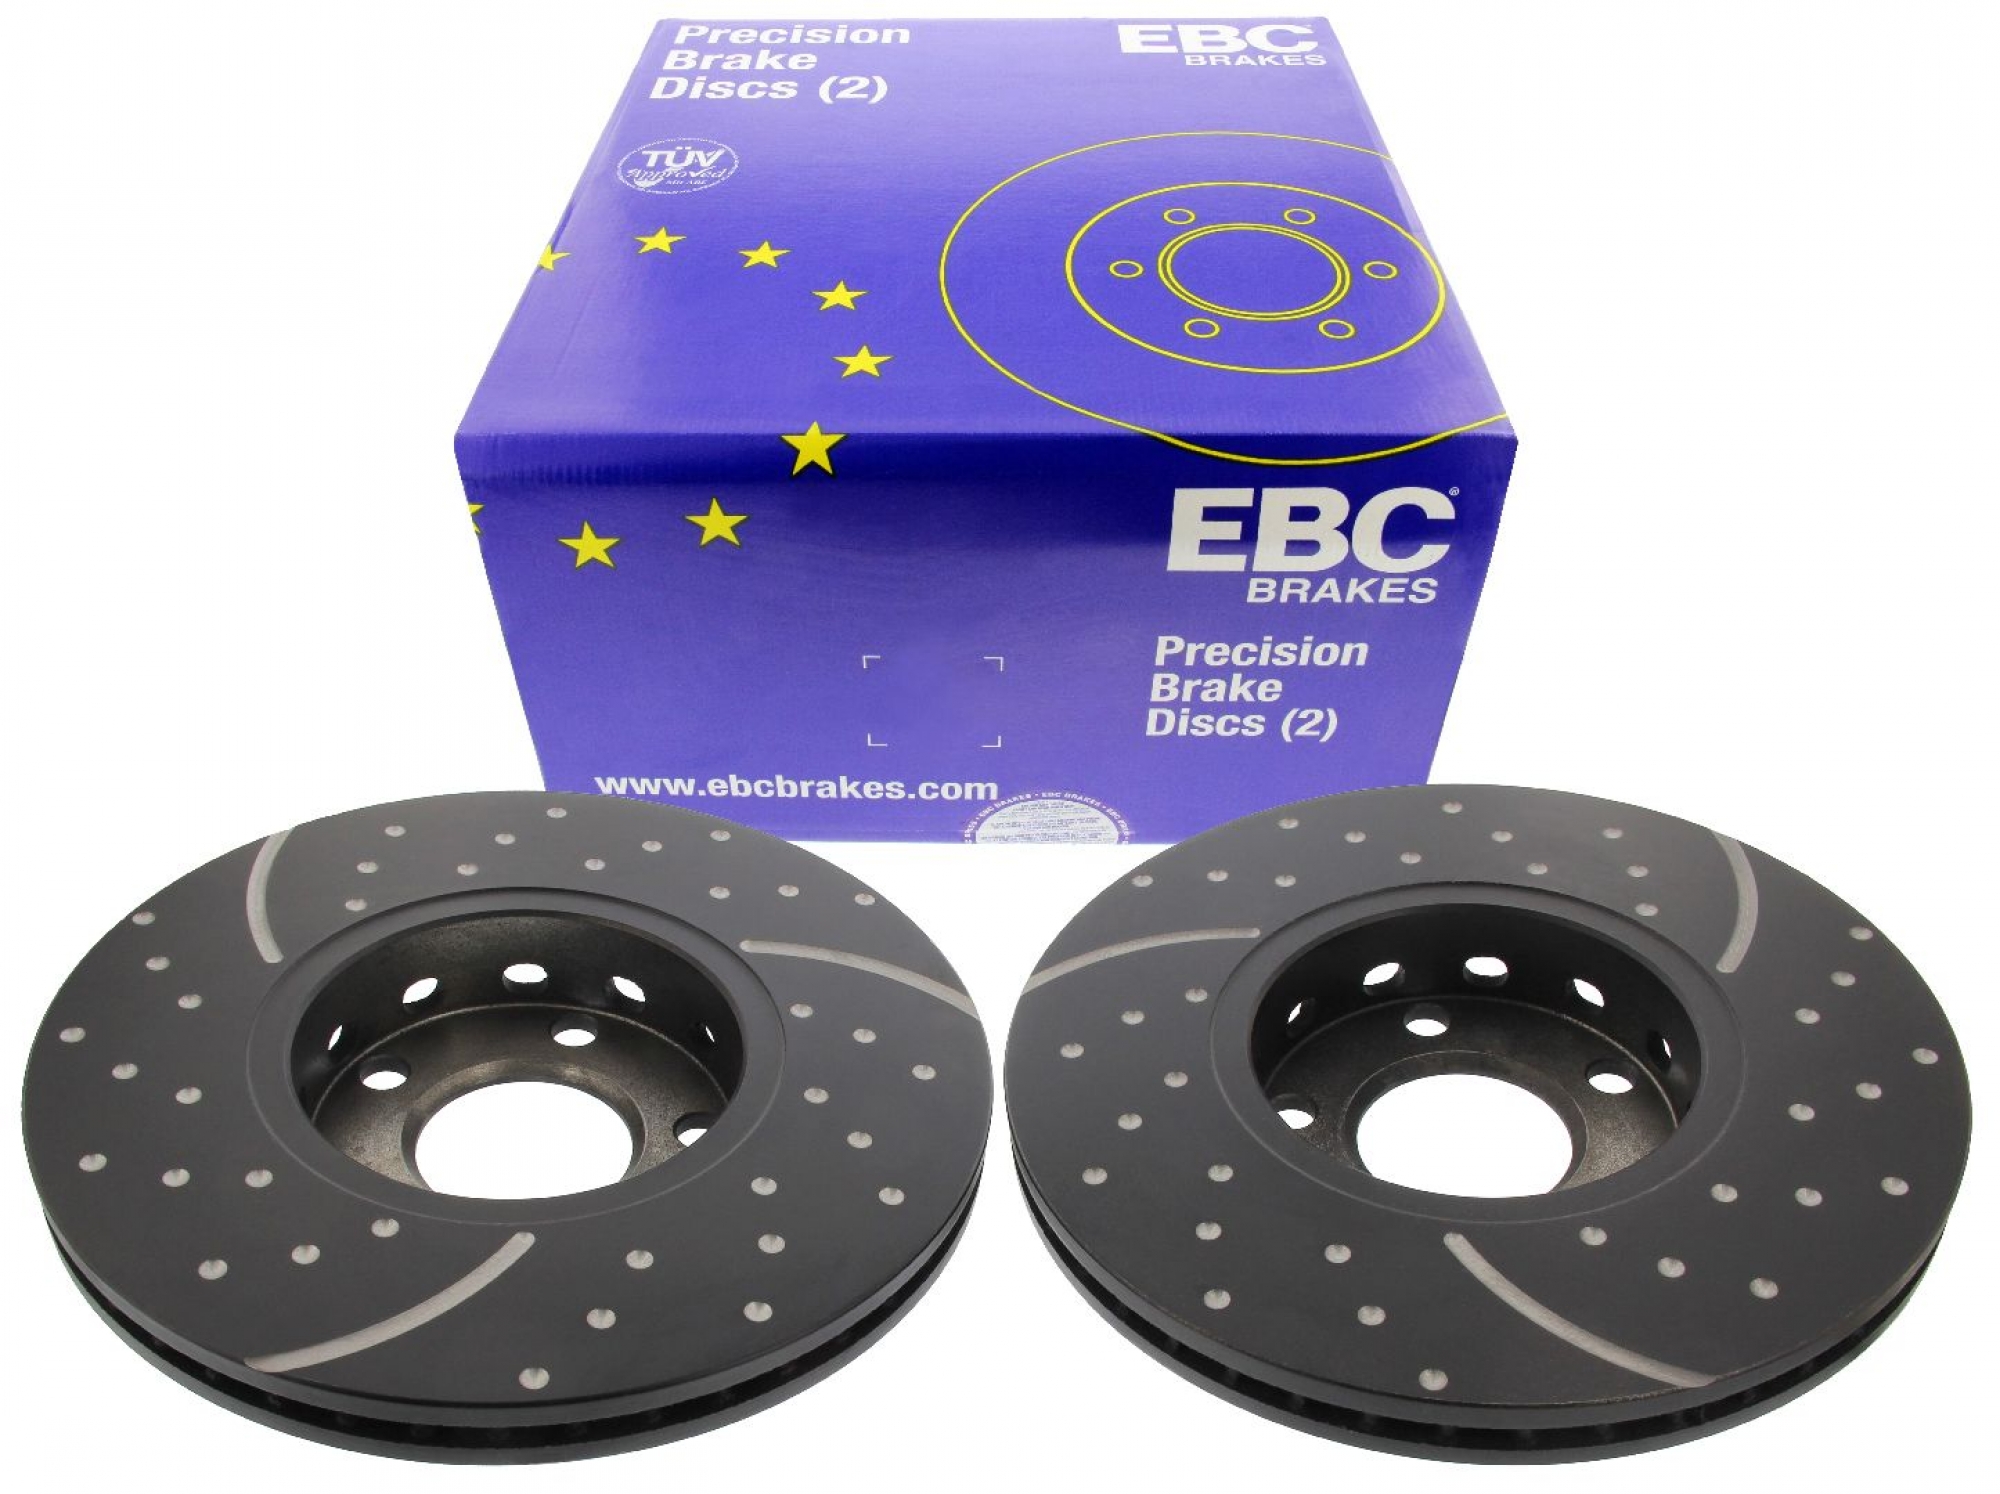 EBC-Bremsscheiben, Turbo Groove Disc Black (2-teilig), VA, Audi, Skoda, VW